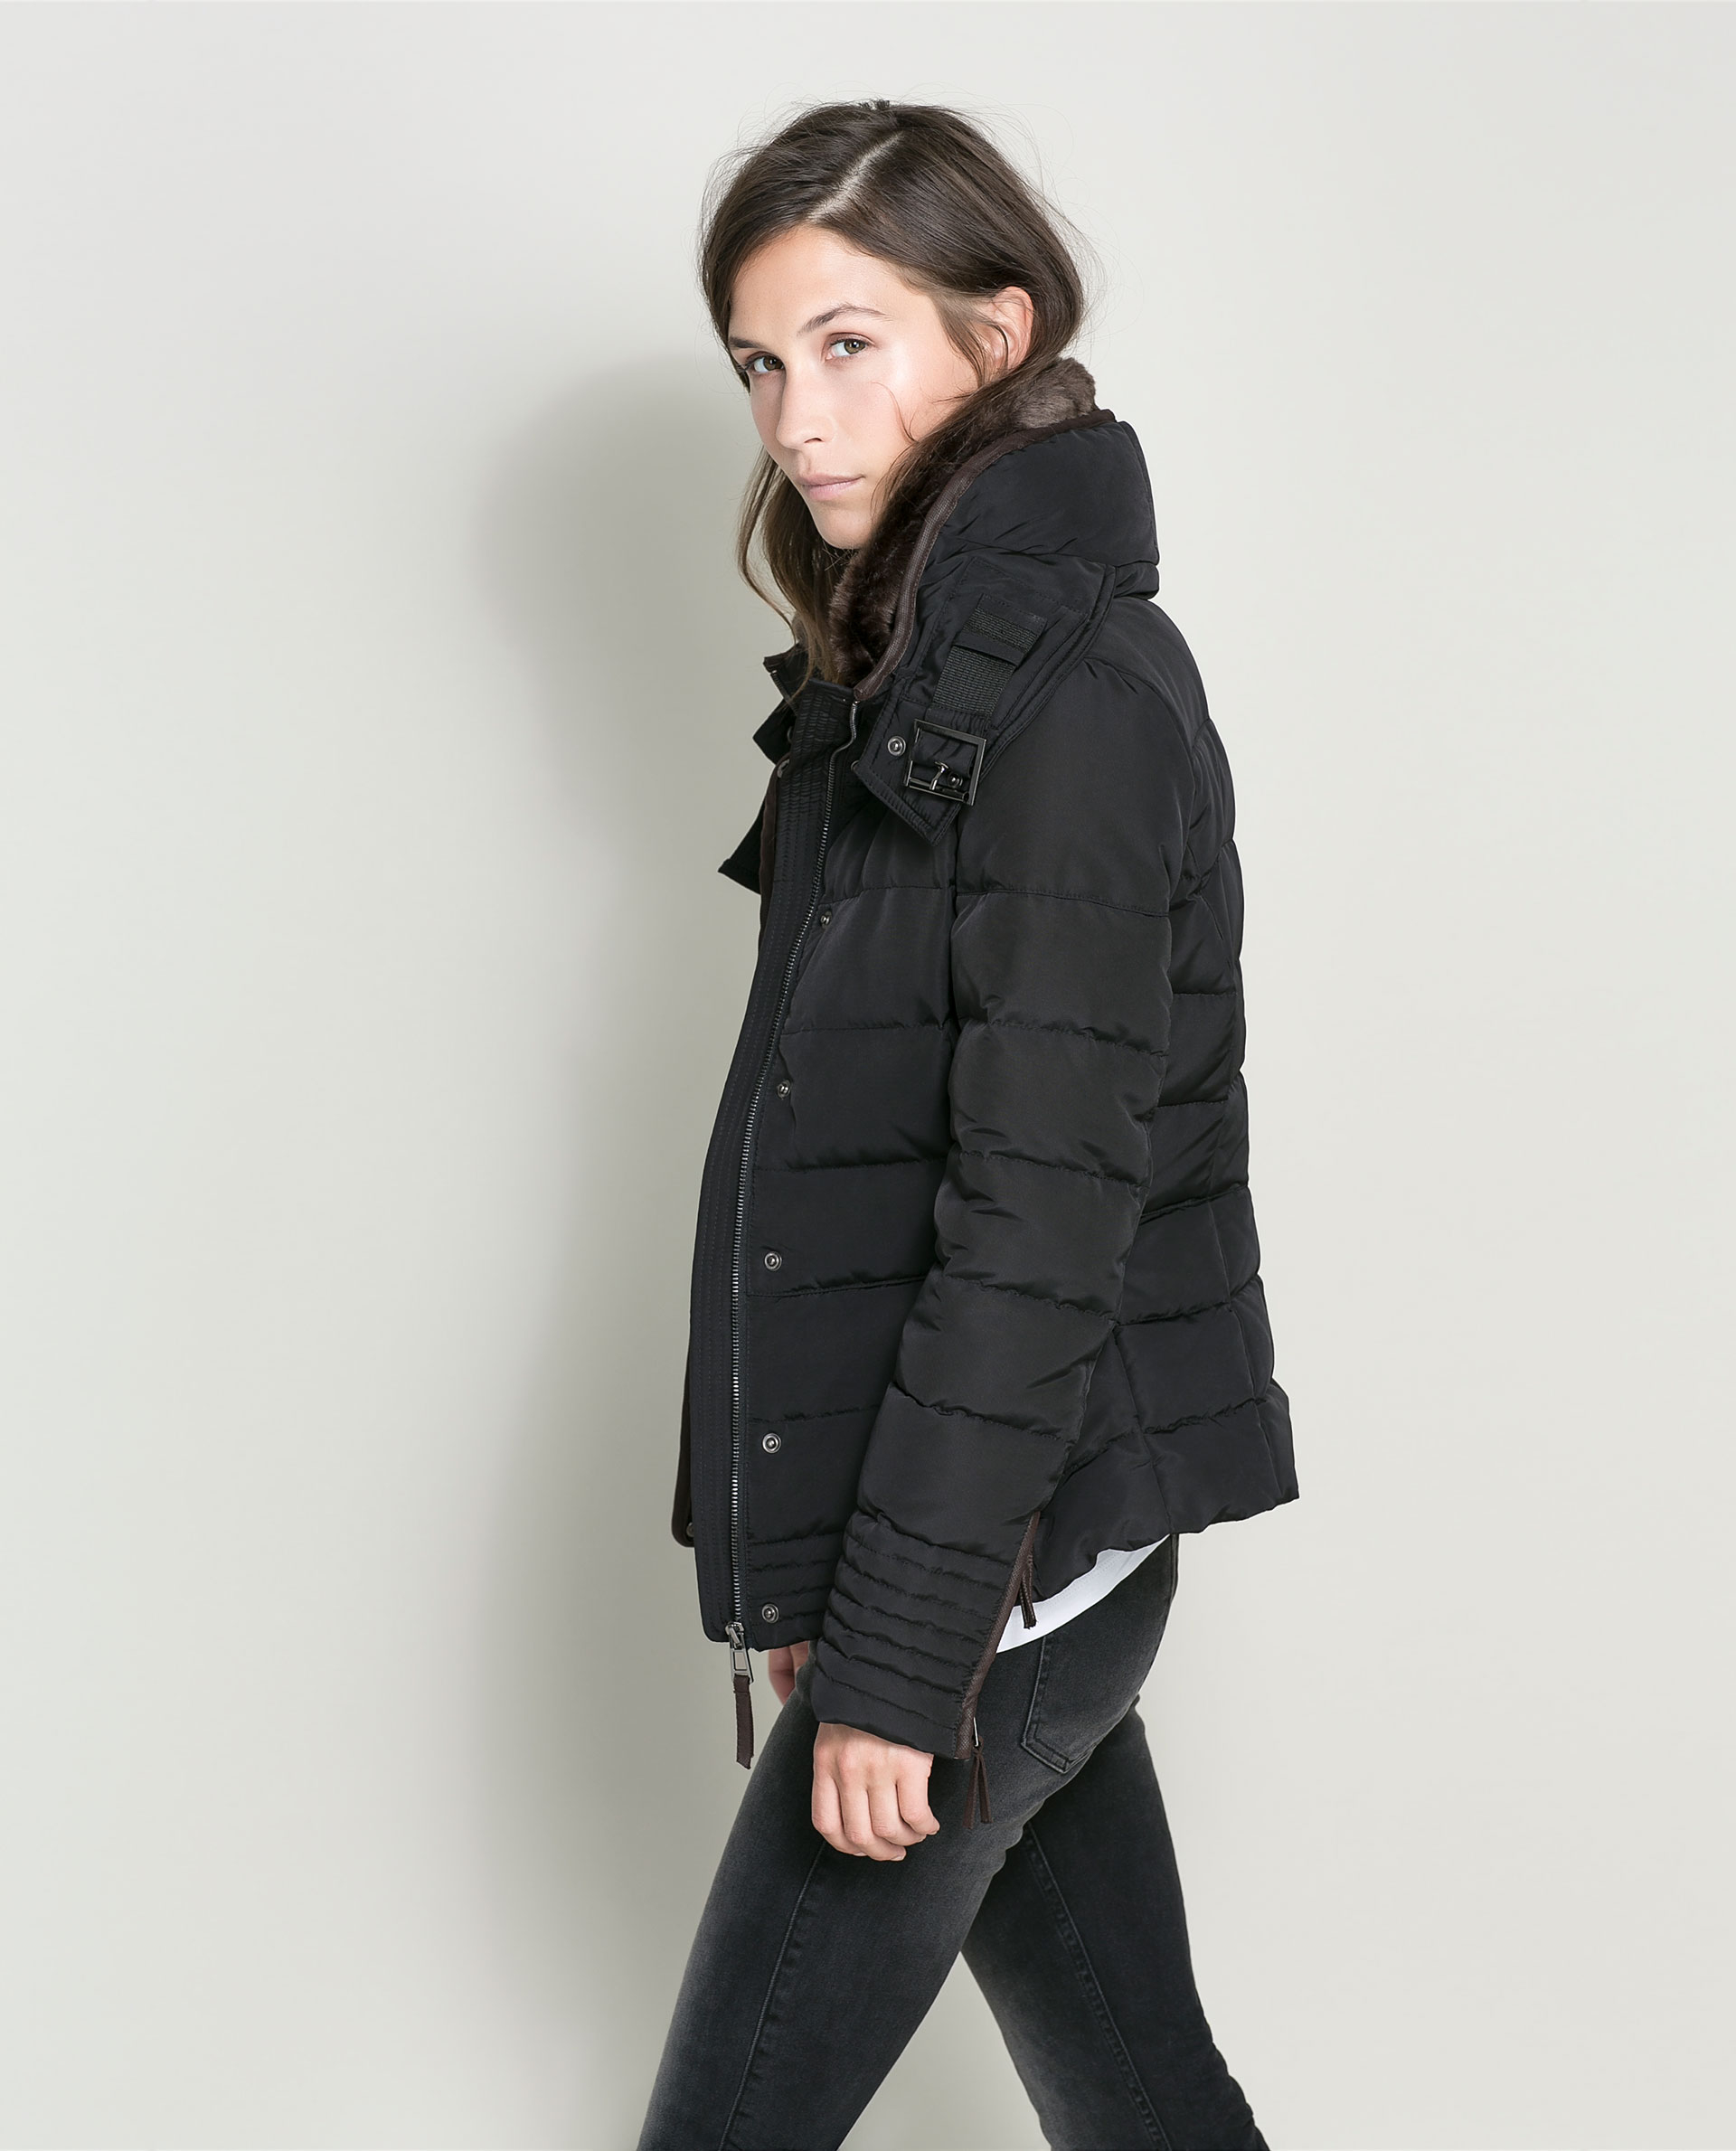 Zara Short Puffer Jacket In Black Lyst